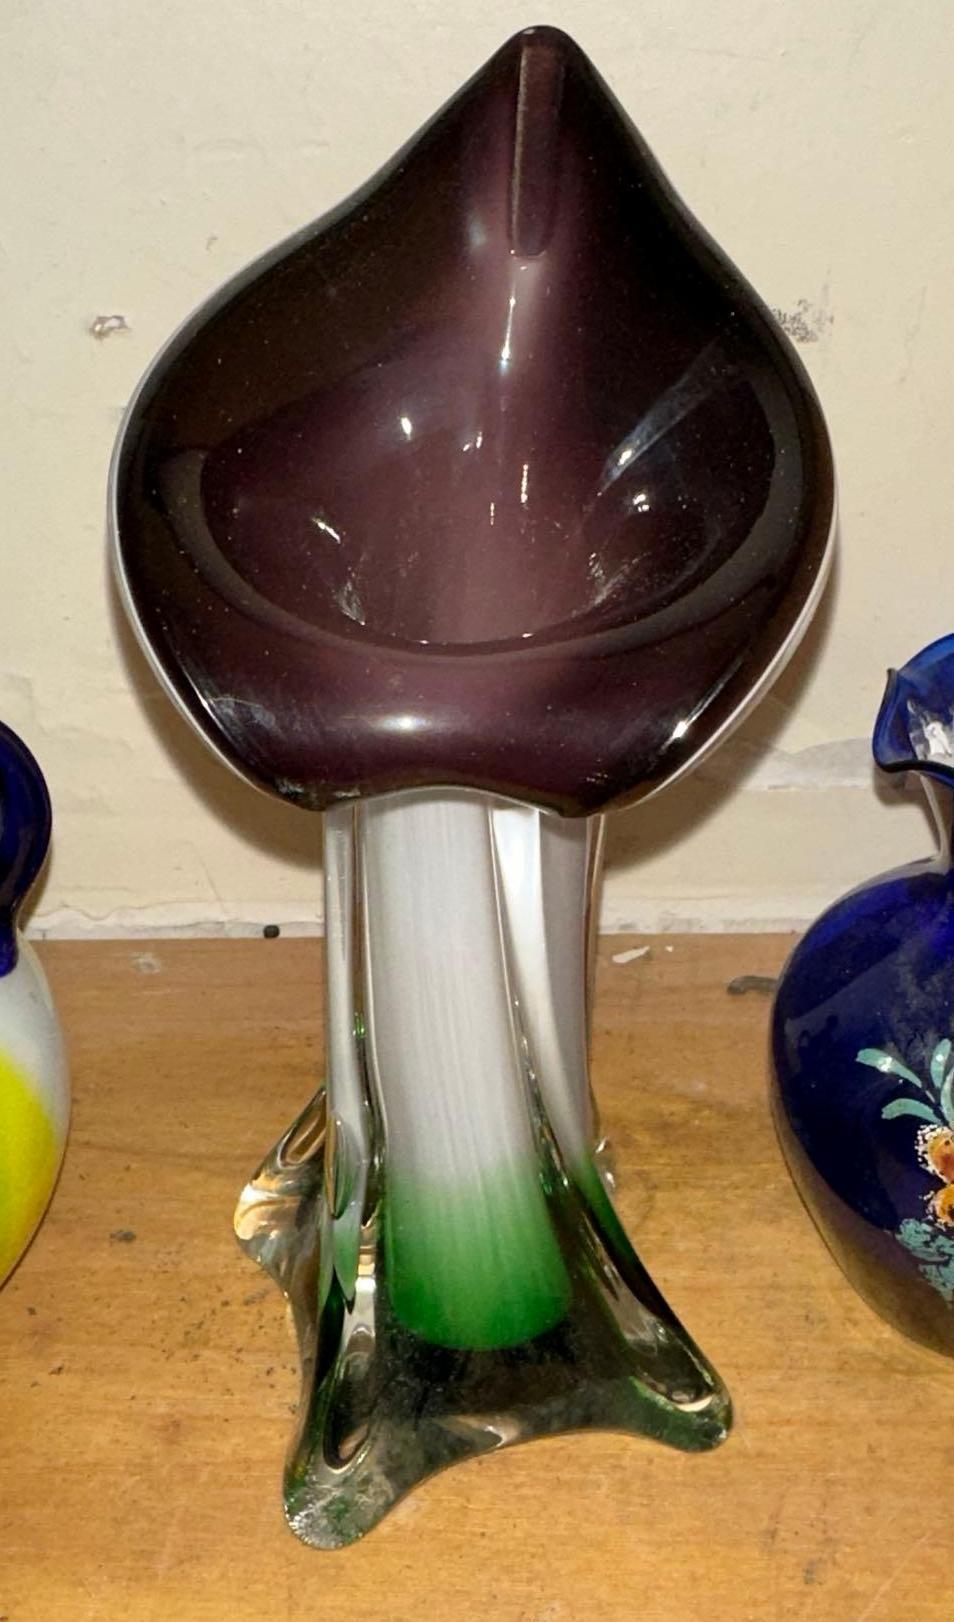 Cobalt Glass Vases, Blown Glass Pitcher, Blown glass vases, Vaseline glass etc